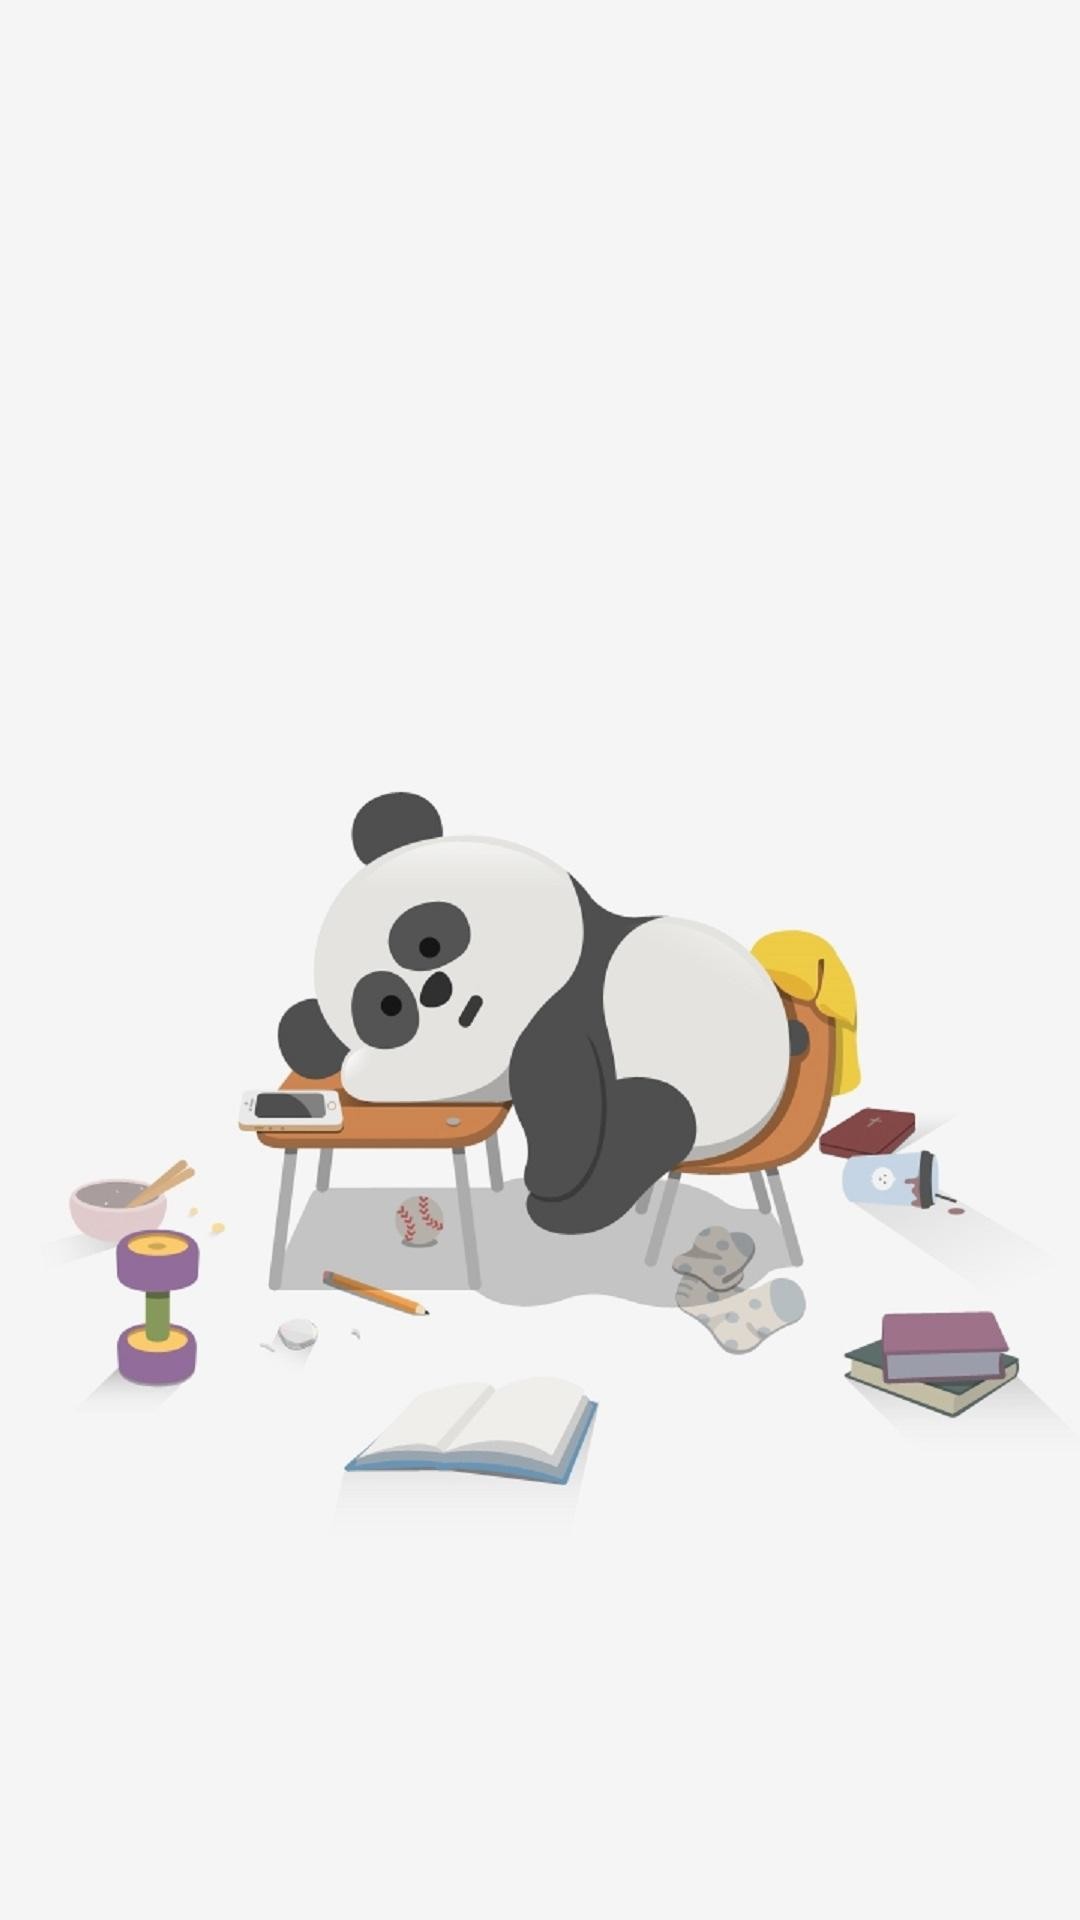 Cute-Sleepy-Panda-Cute-Animal-iPhone-Tap-to-